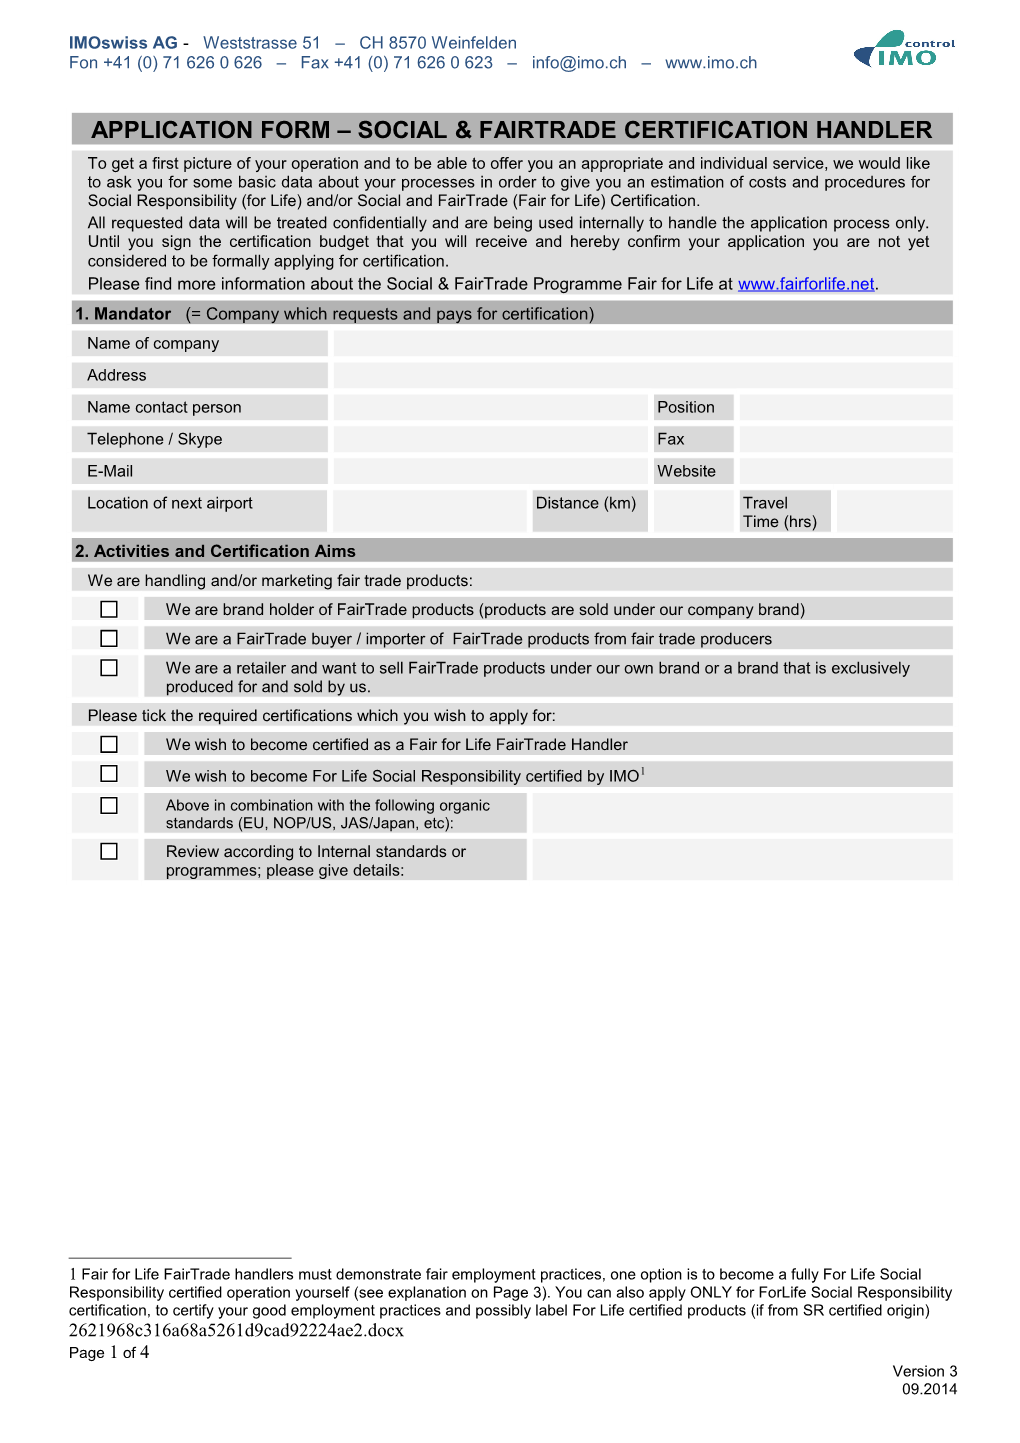 Application Form Social & Fairtrade Certification